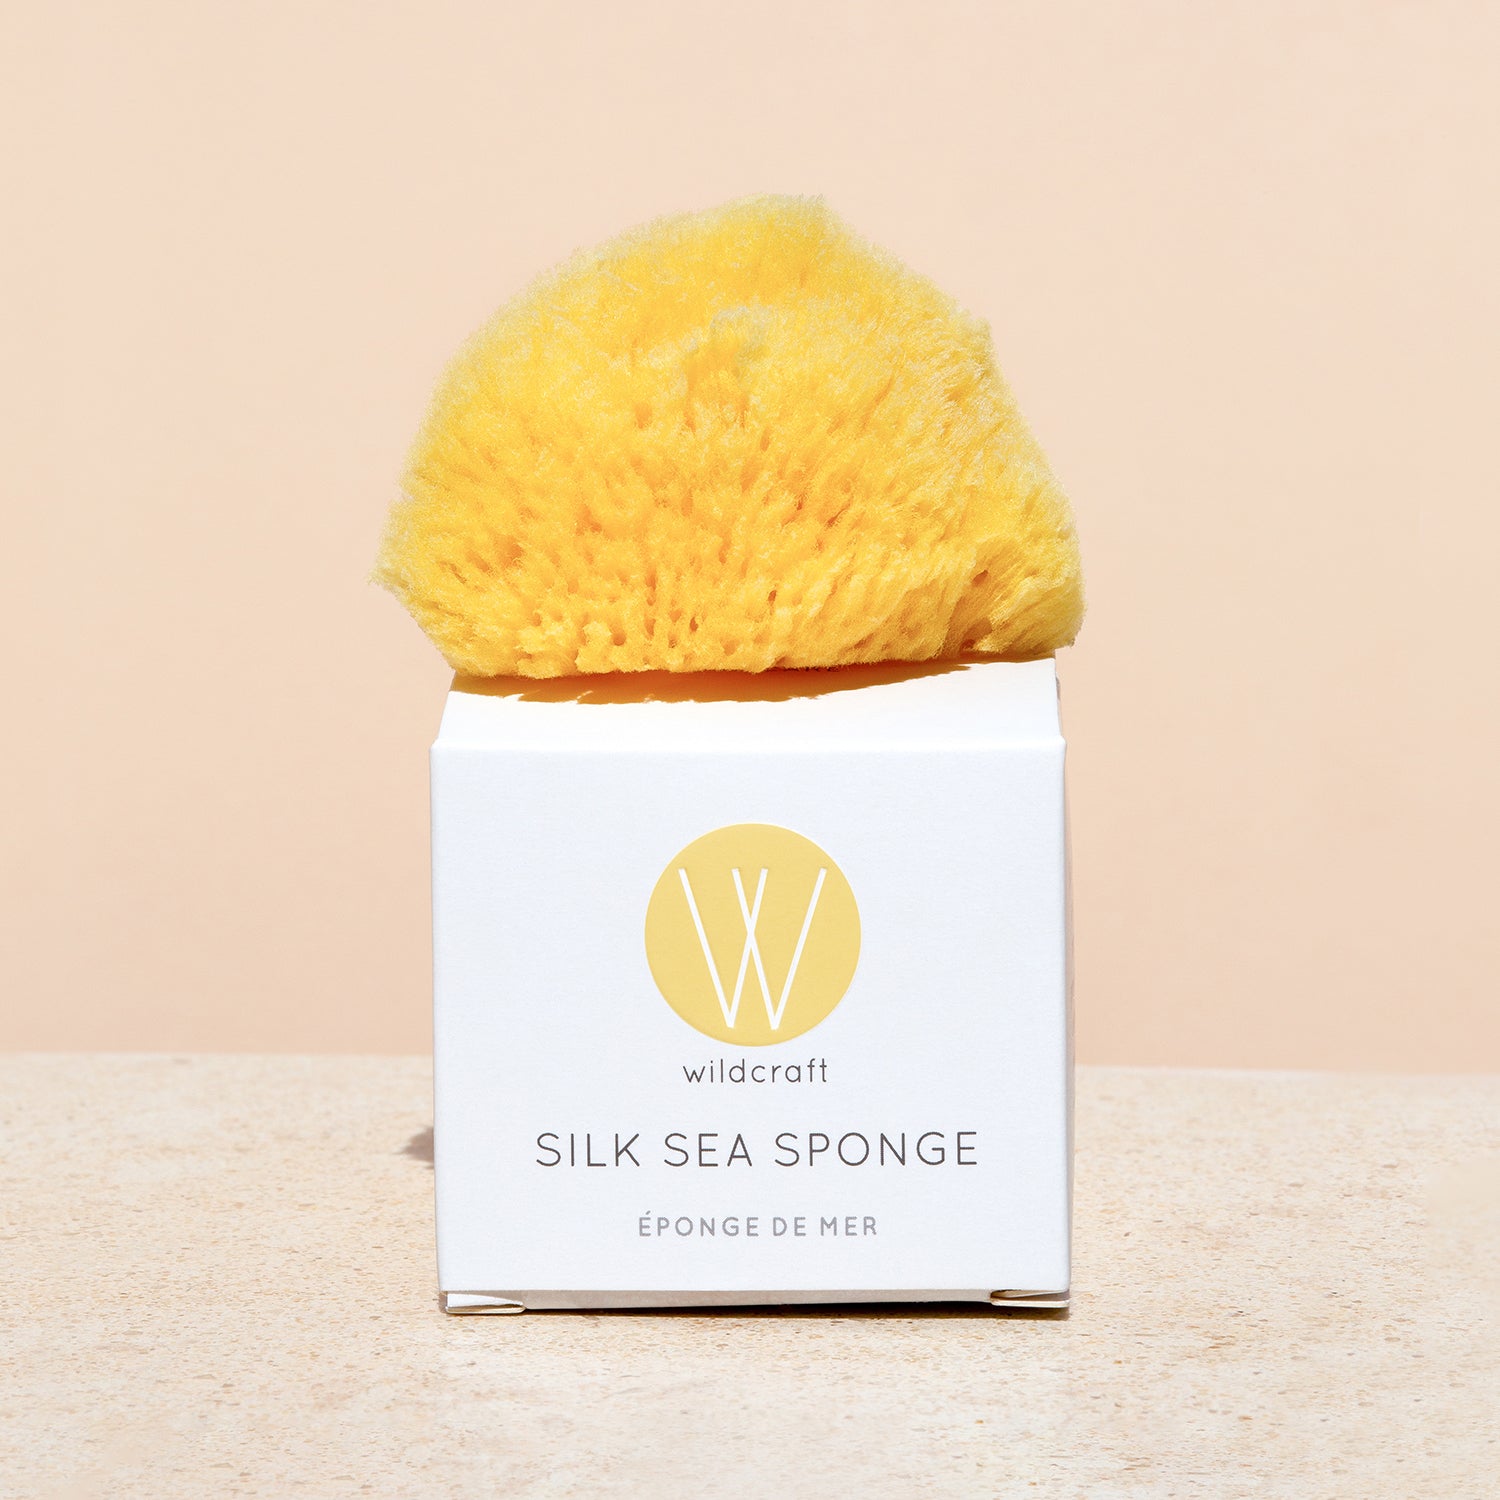 Silk Sea Sponge on a box